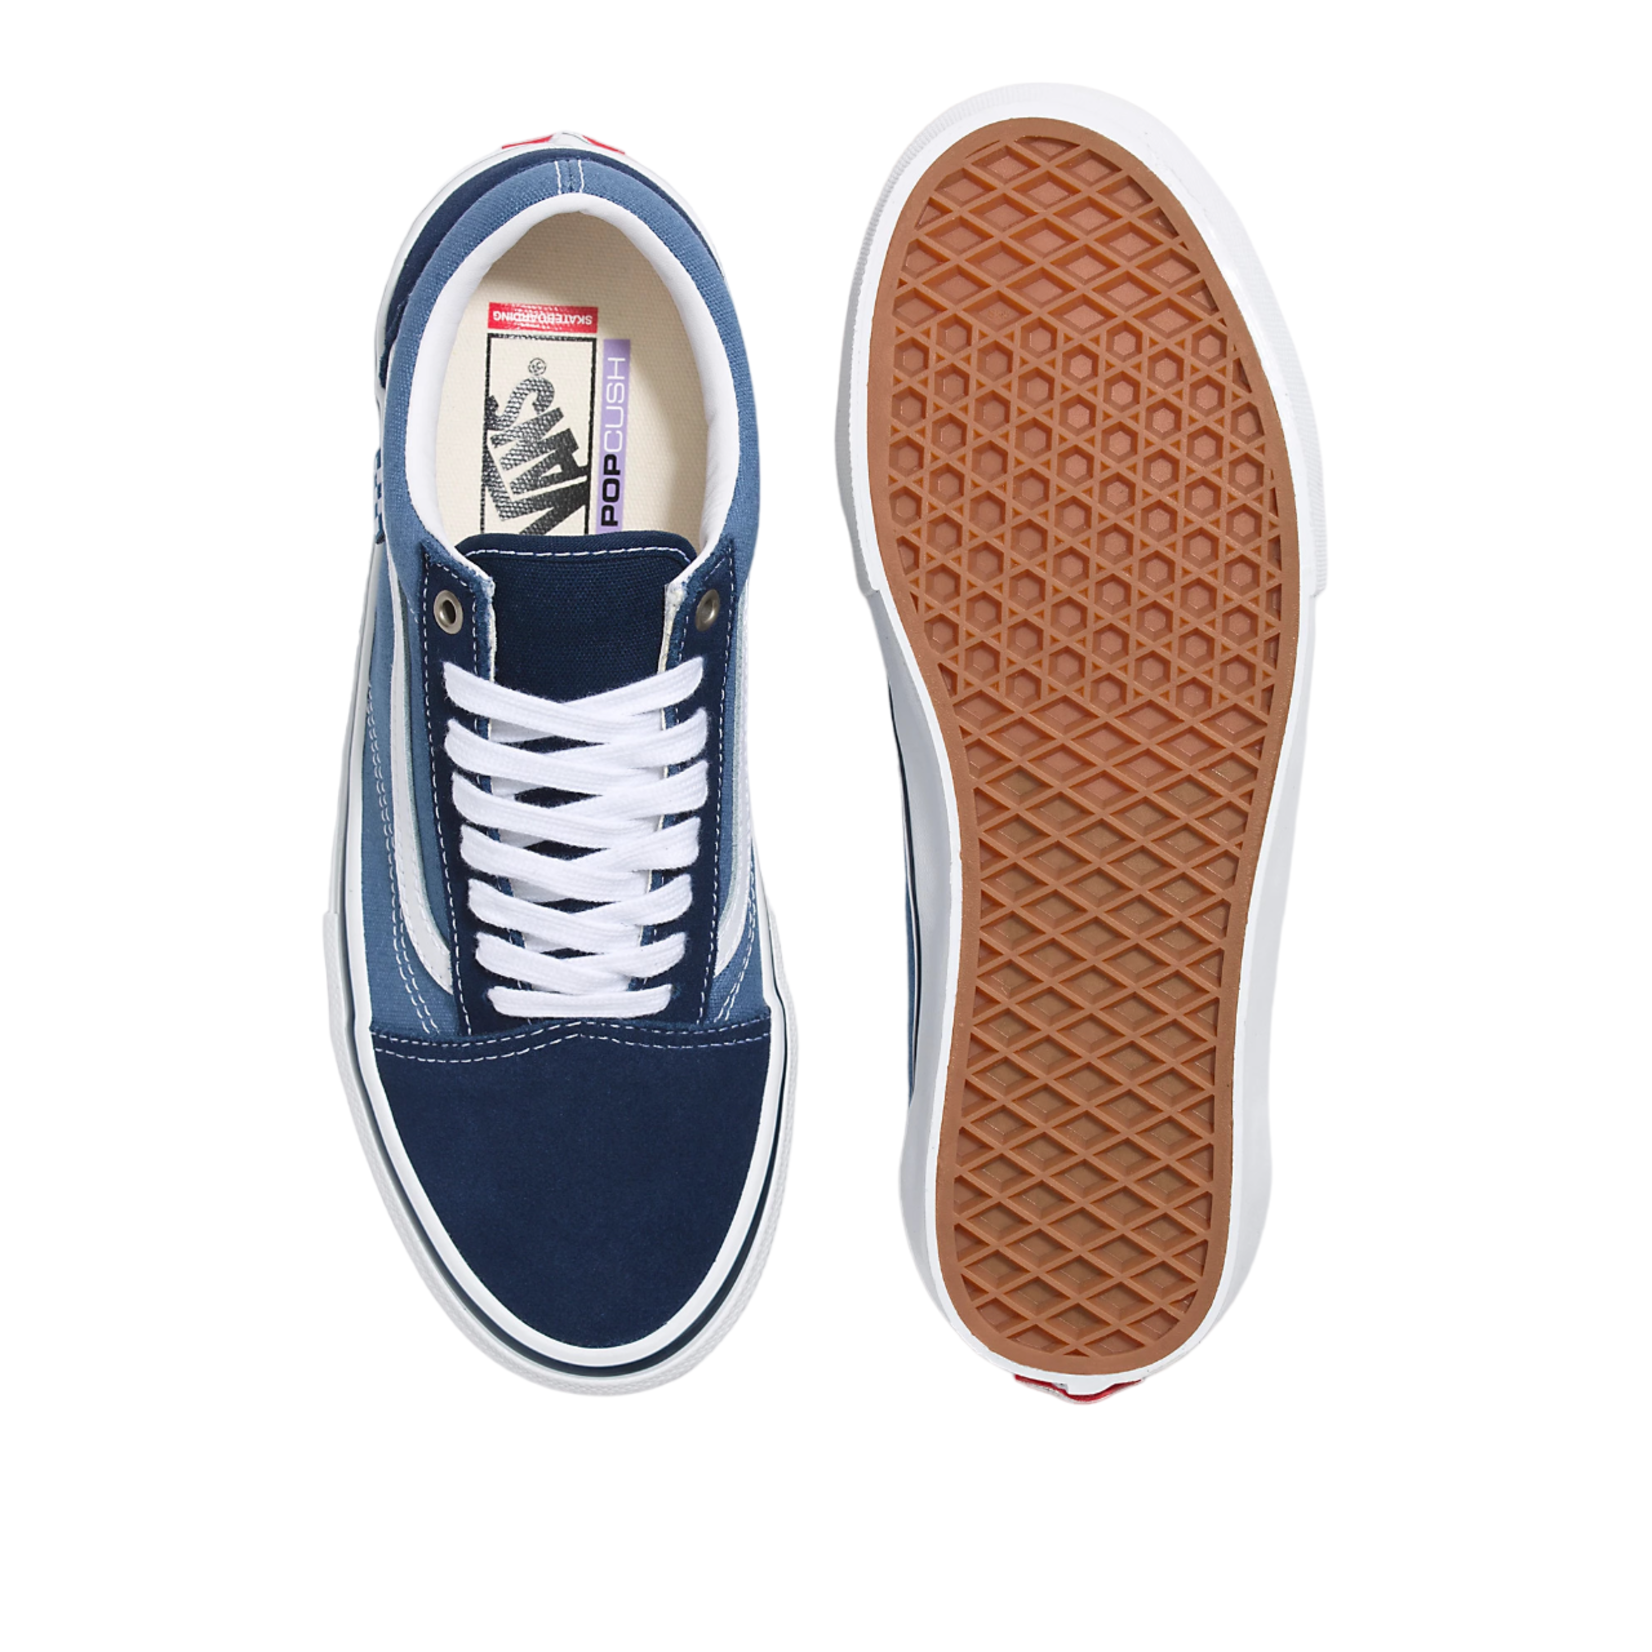 Vans Old Skool Shoes - Navy/White - - Skate &